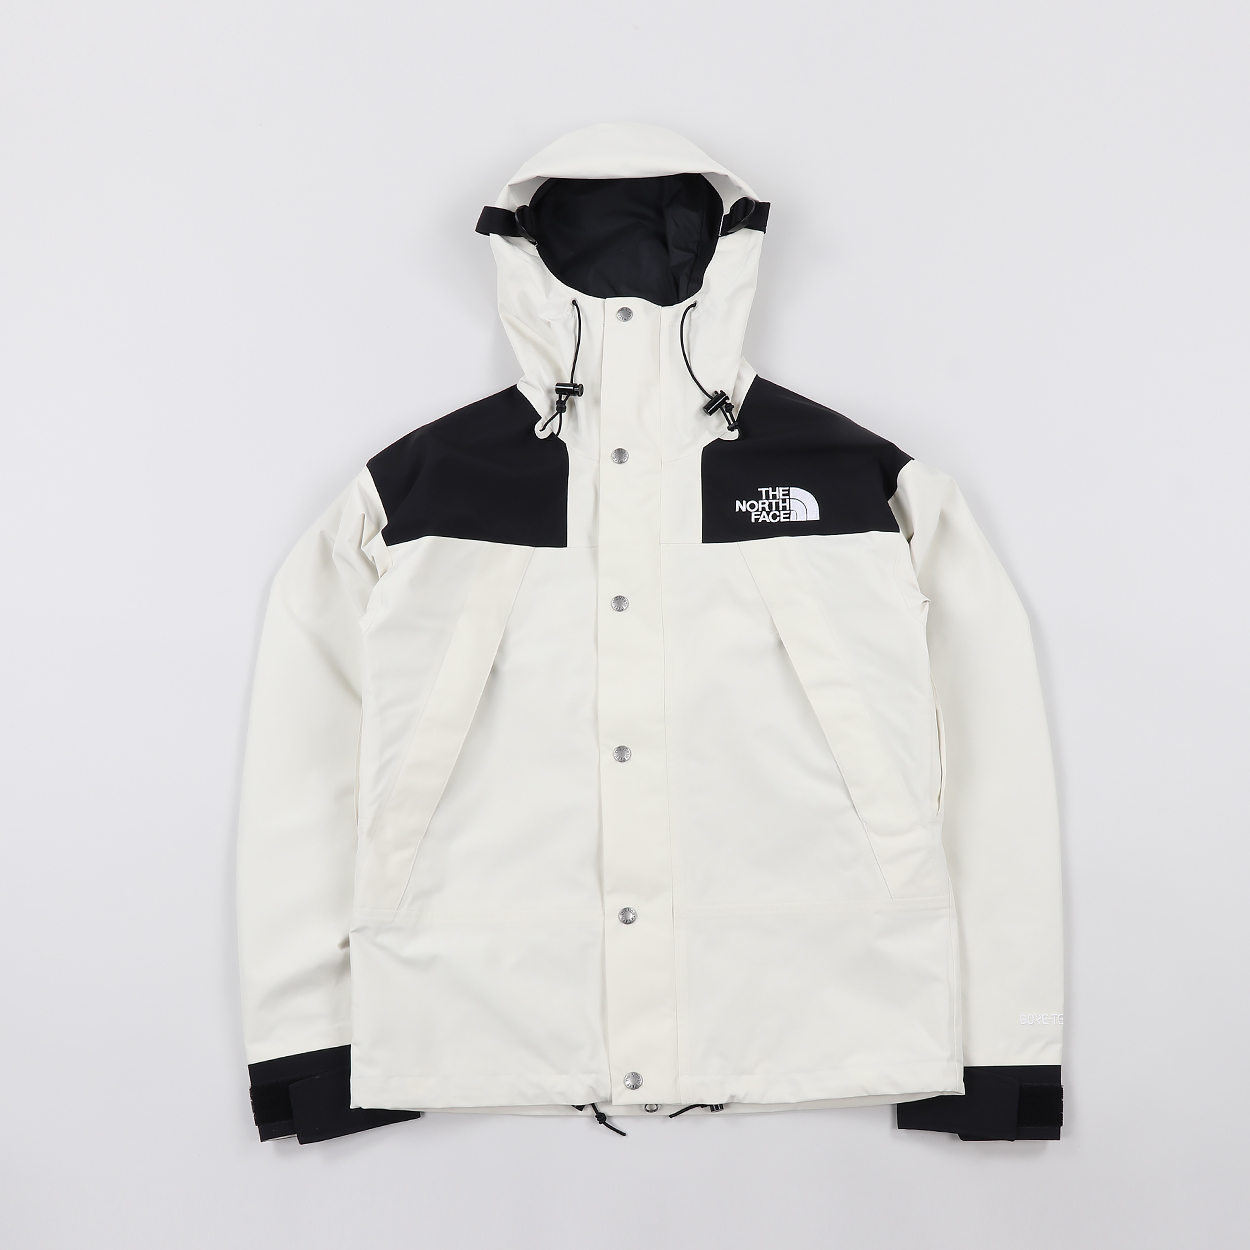 1990 mountain jacket gtx review